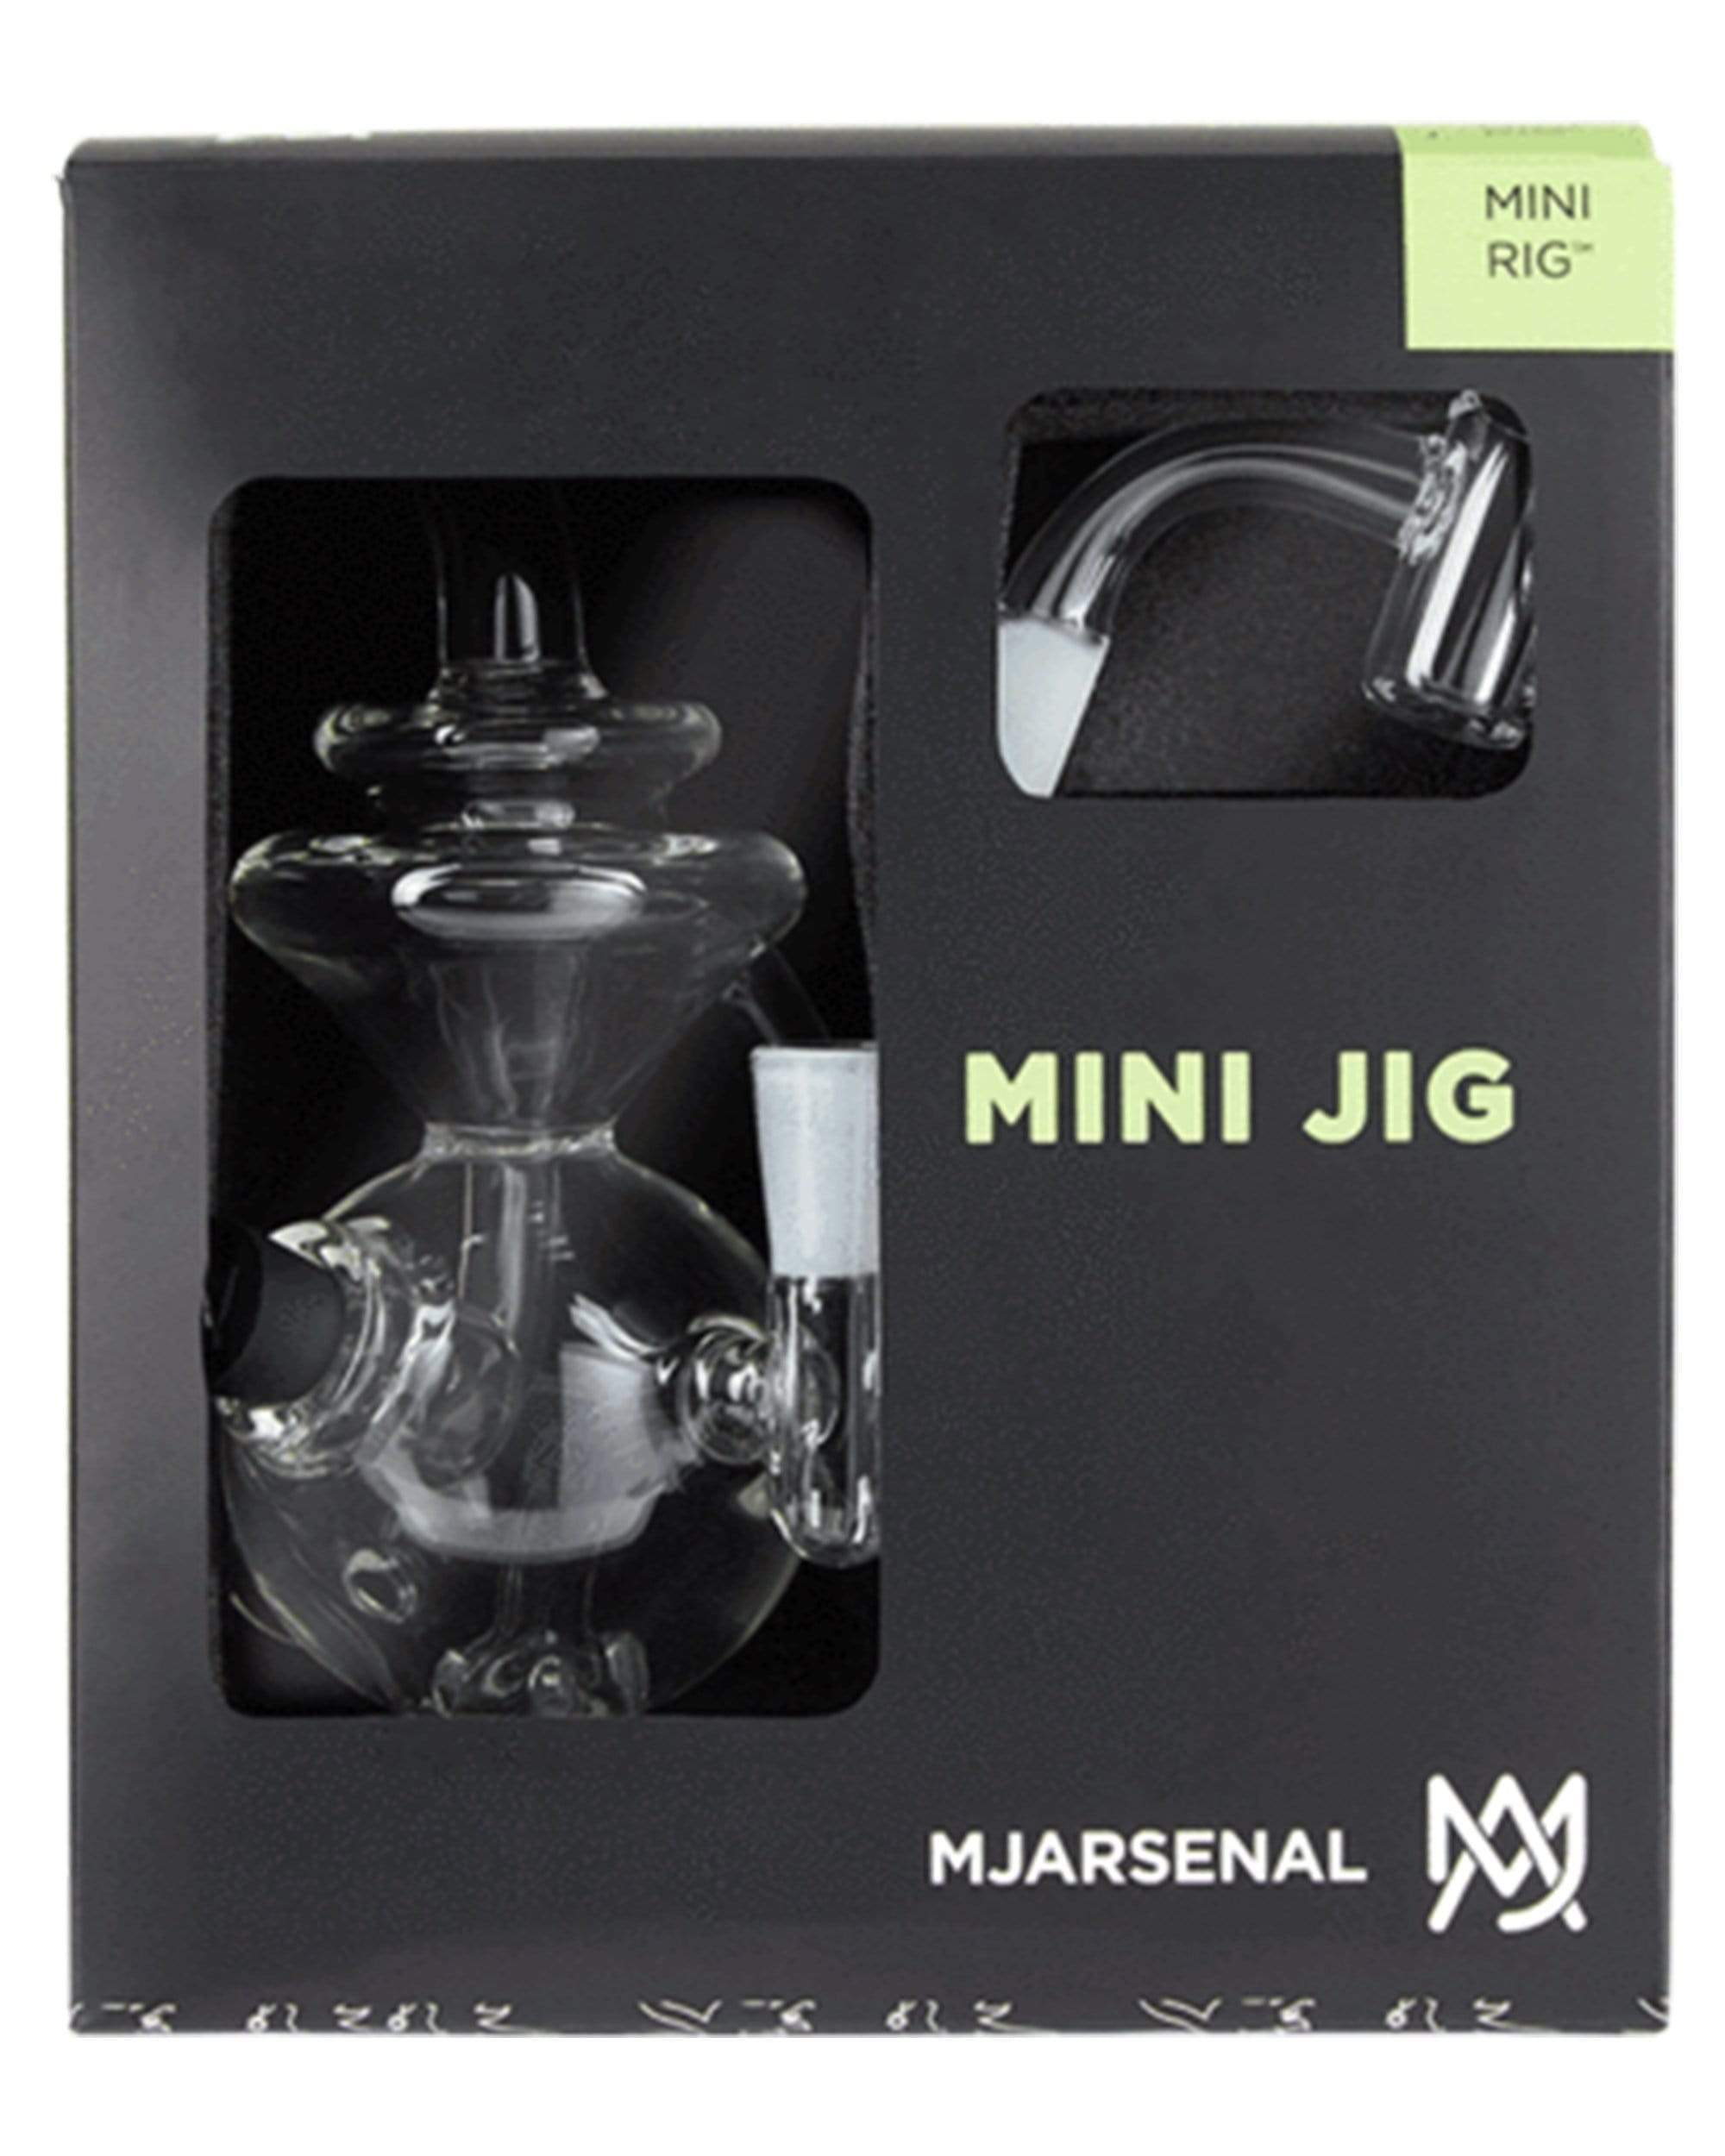 MJ Arsenal Jig Mini Rig